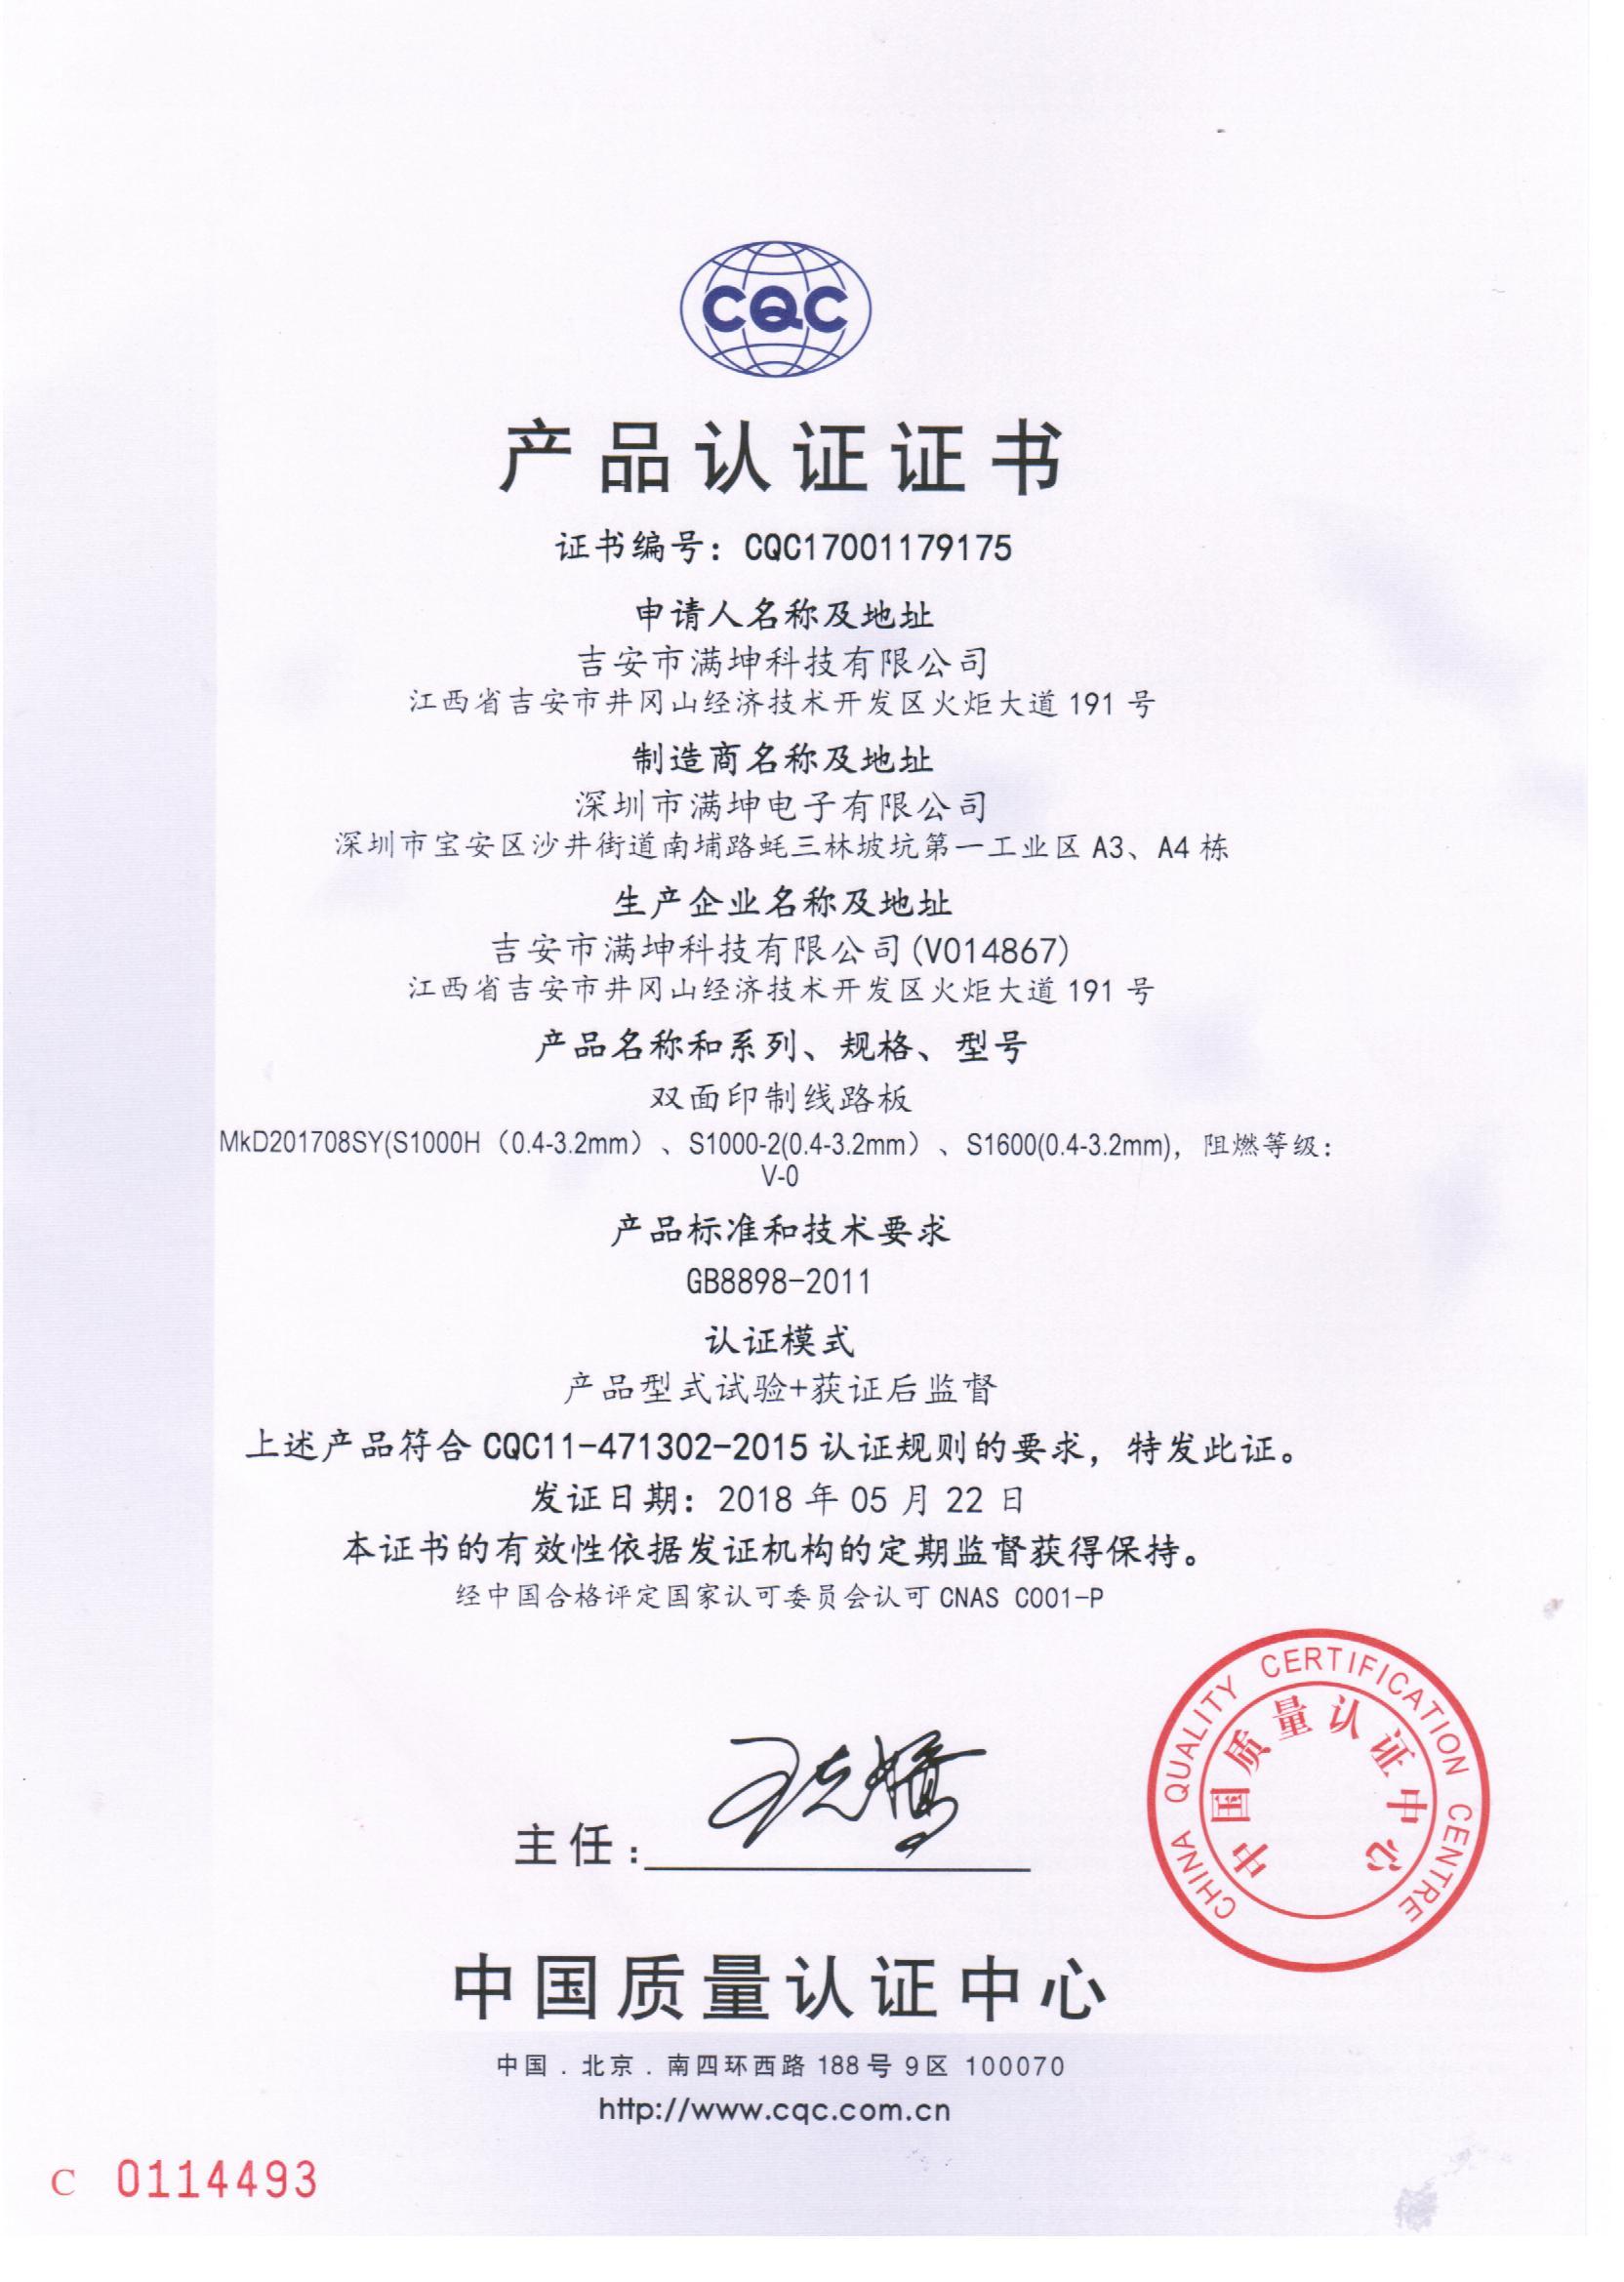 Double panel CQC certificate: 2015